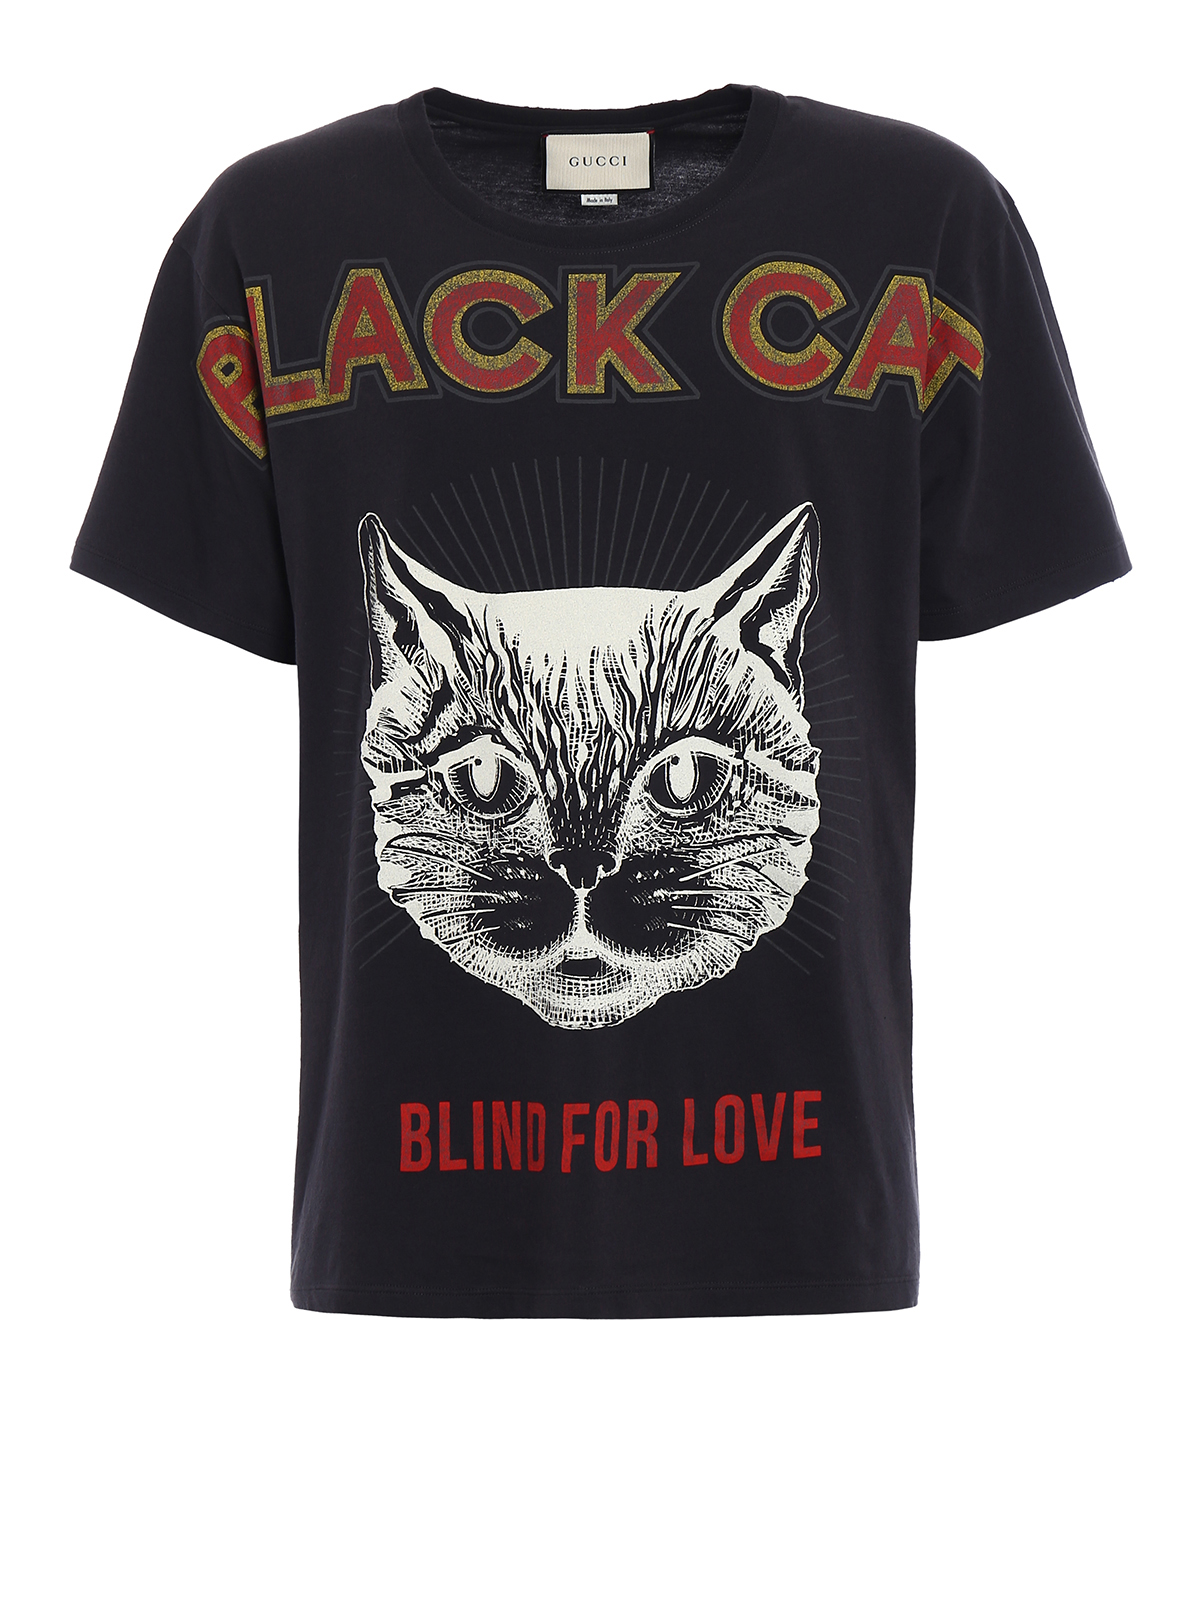 black cat gucci shirt,OFF 67%,www.concordehotels.com.tr